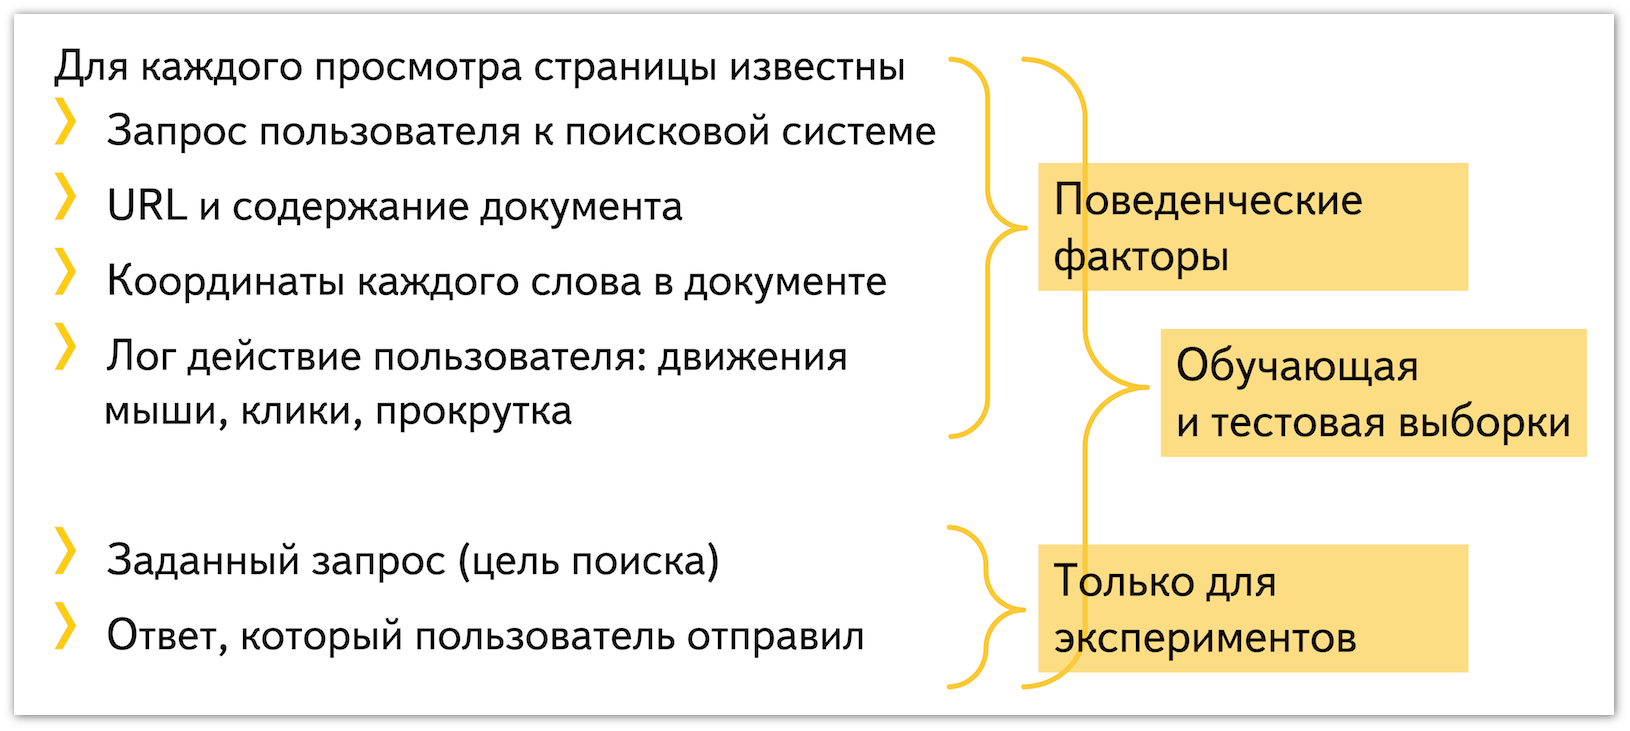 Анализ неявных предпочтений пользователей. Научно технический семинар в Яндексе